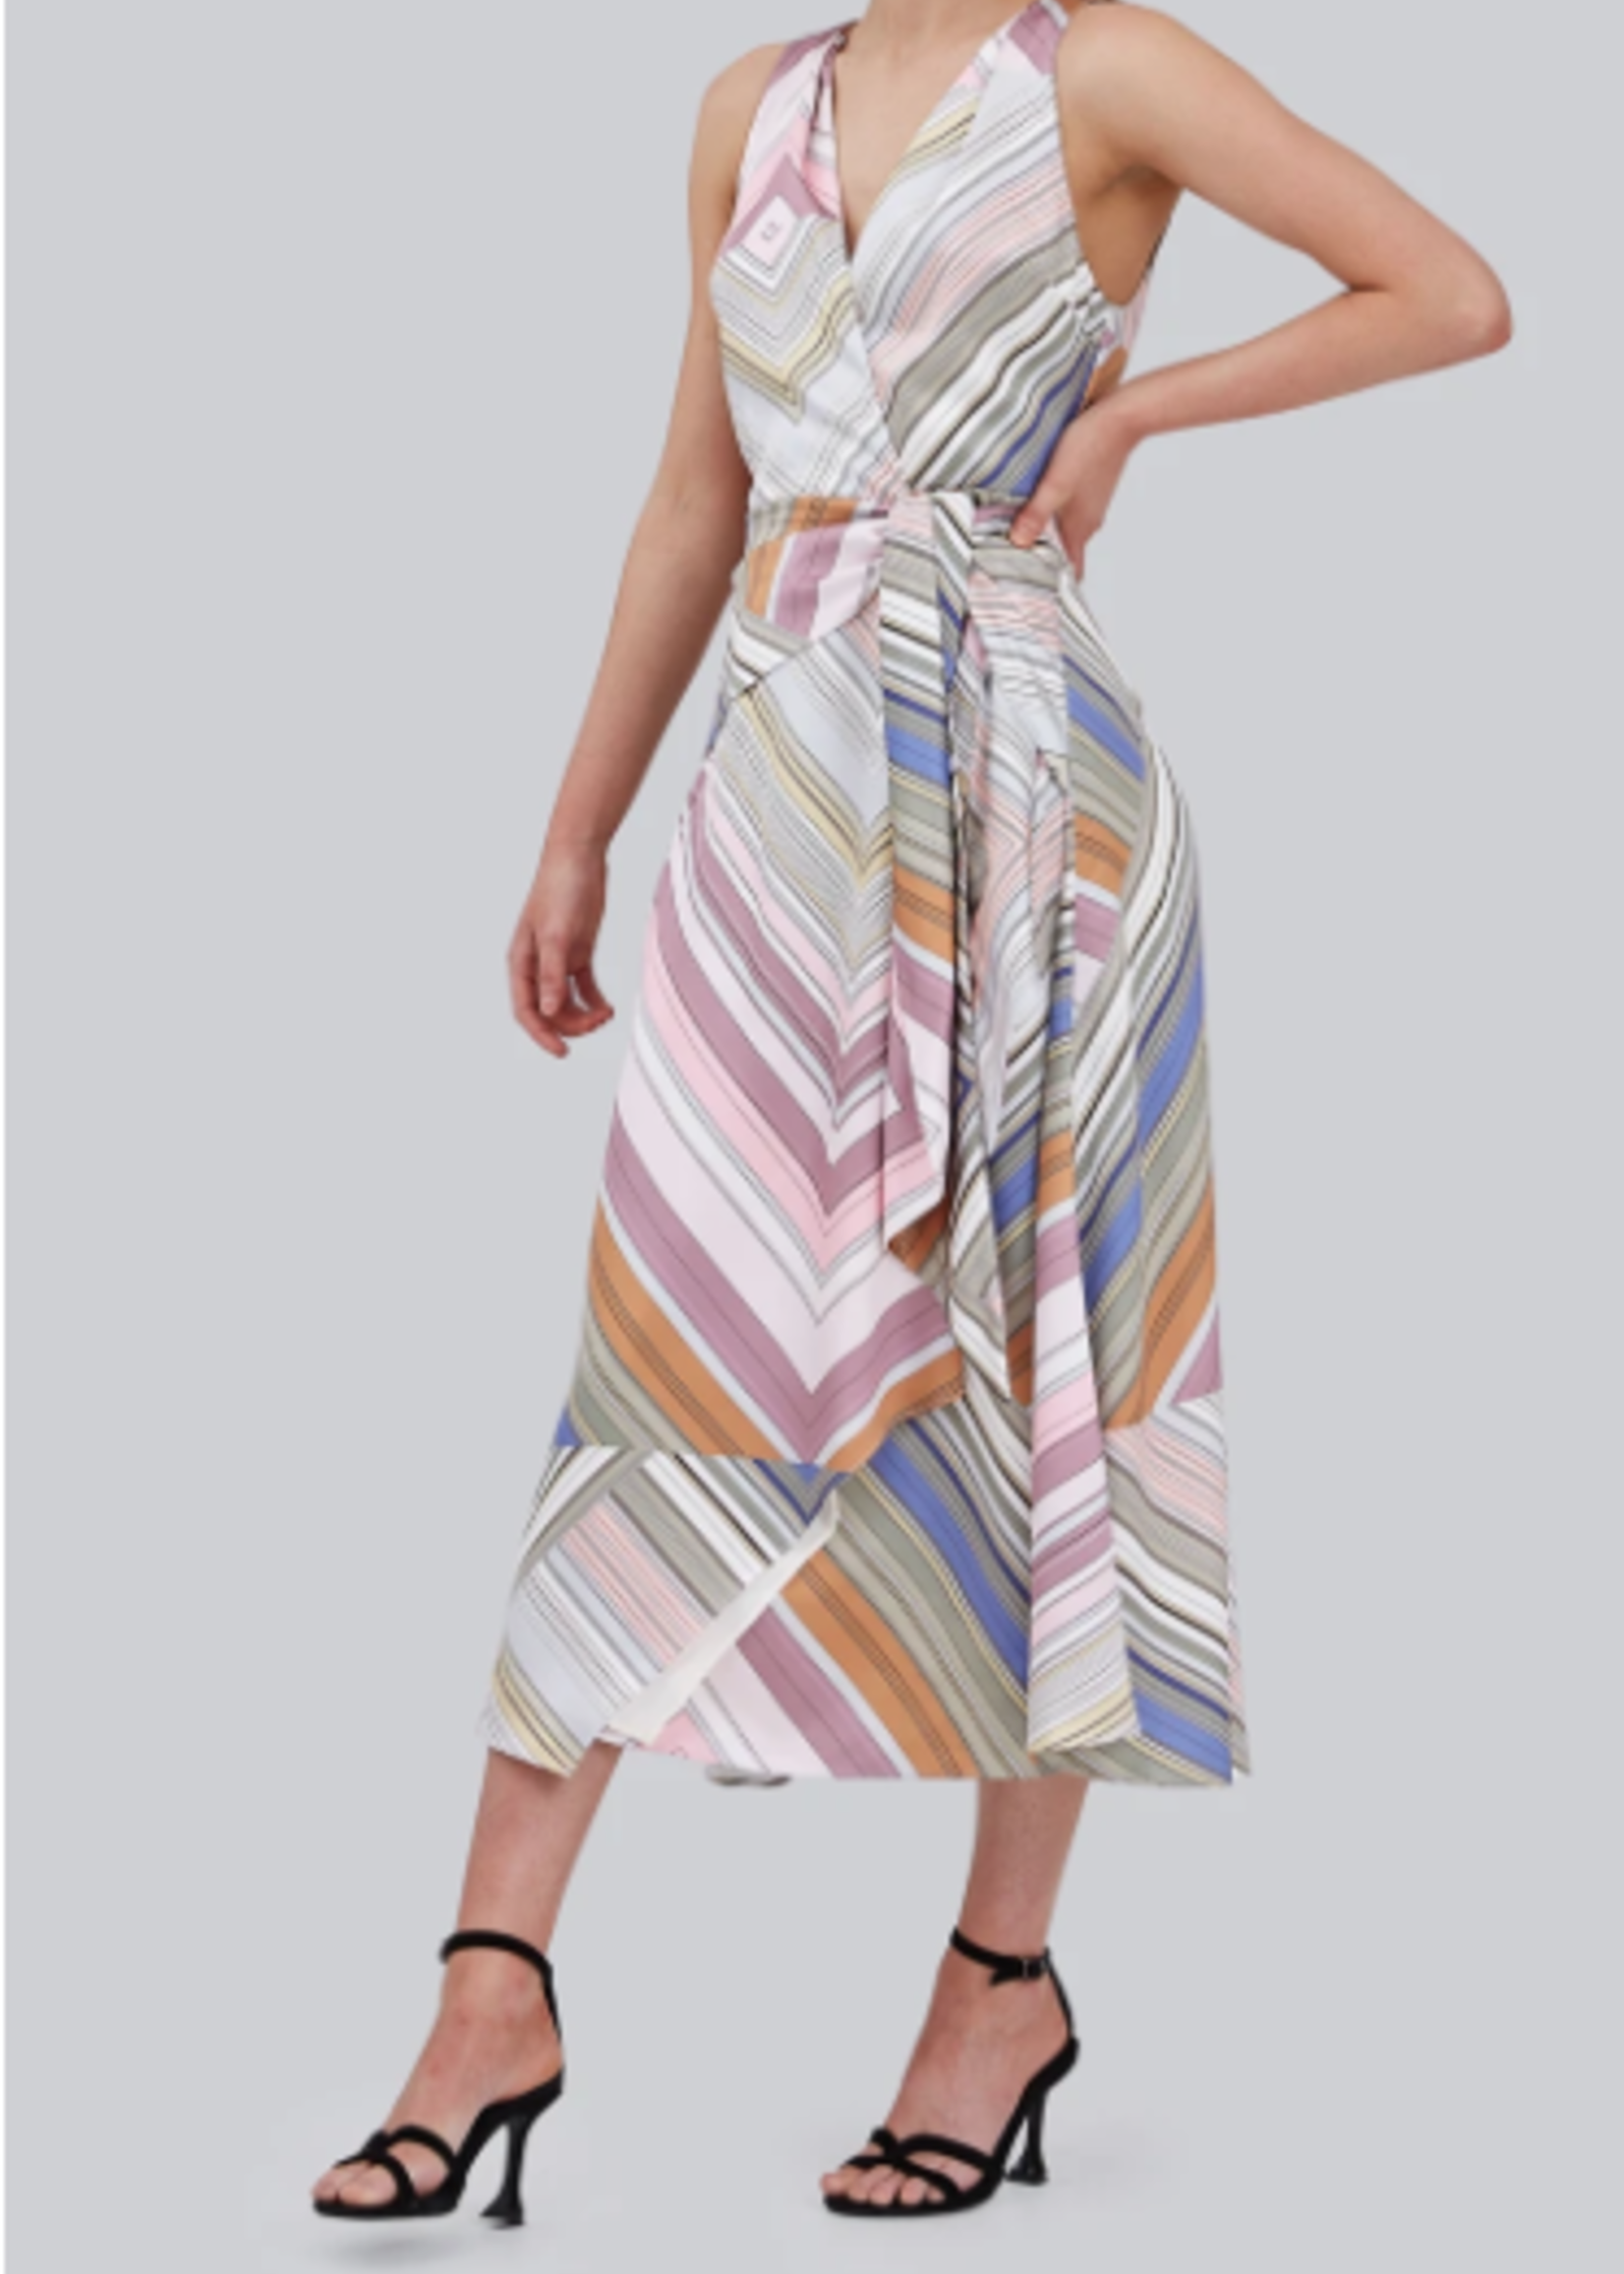 Elitaire Boutique Burning Midi Dress in Multi Stripe